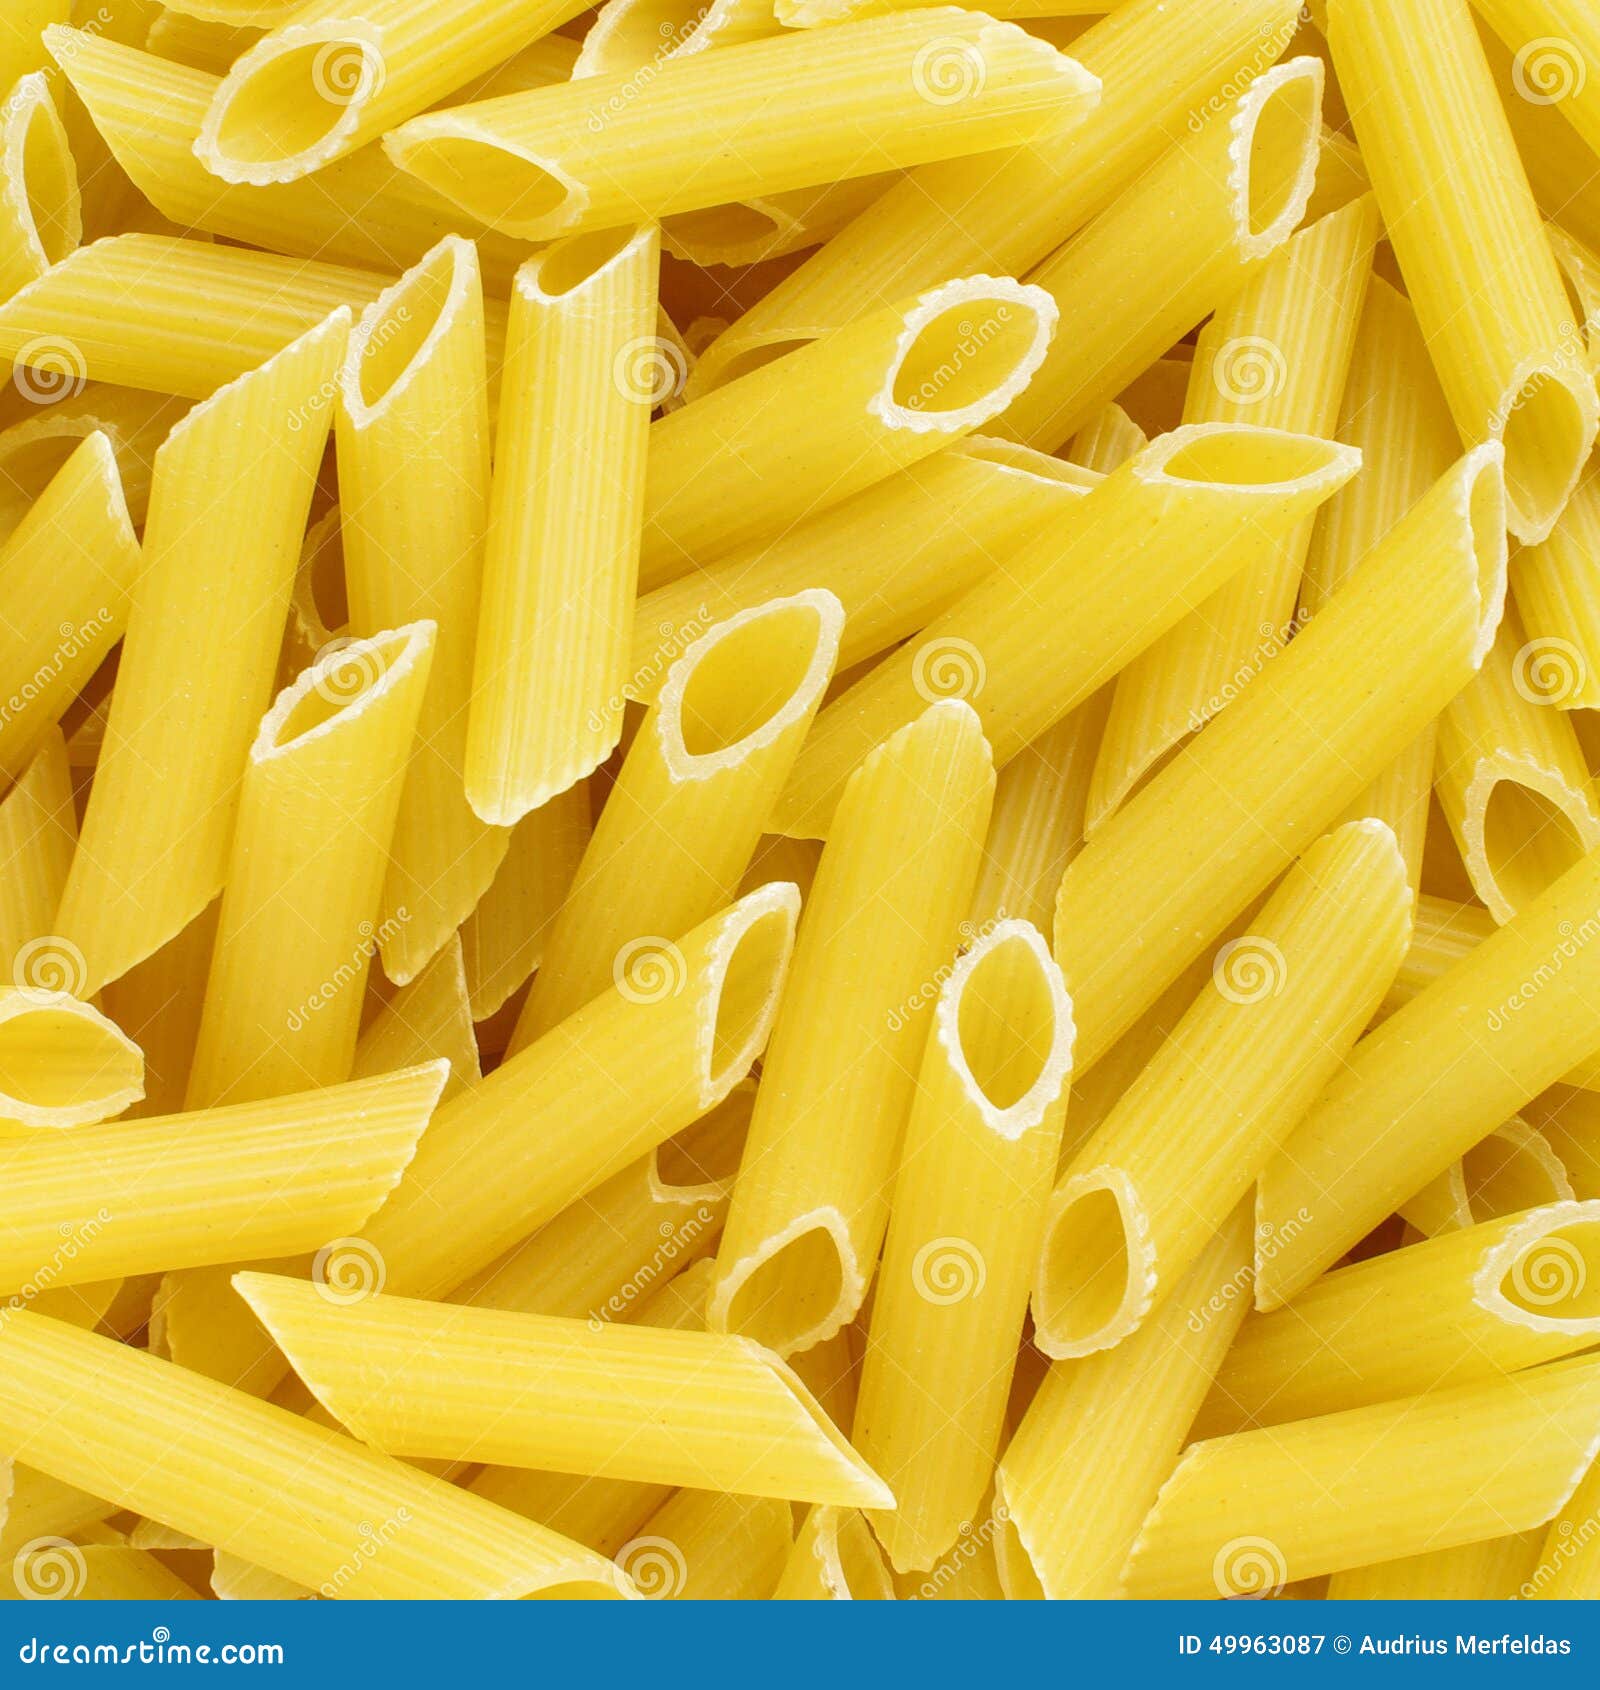 golden penne rigate italian pasta texture background